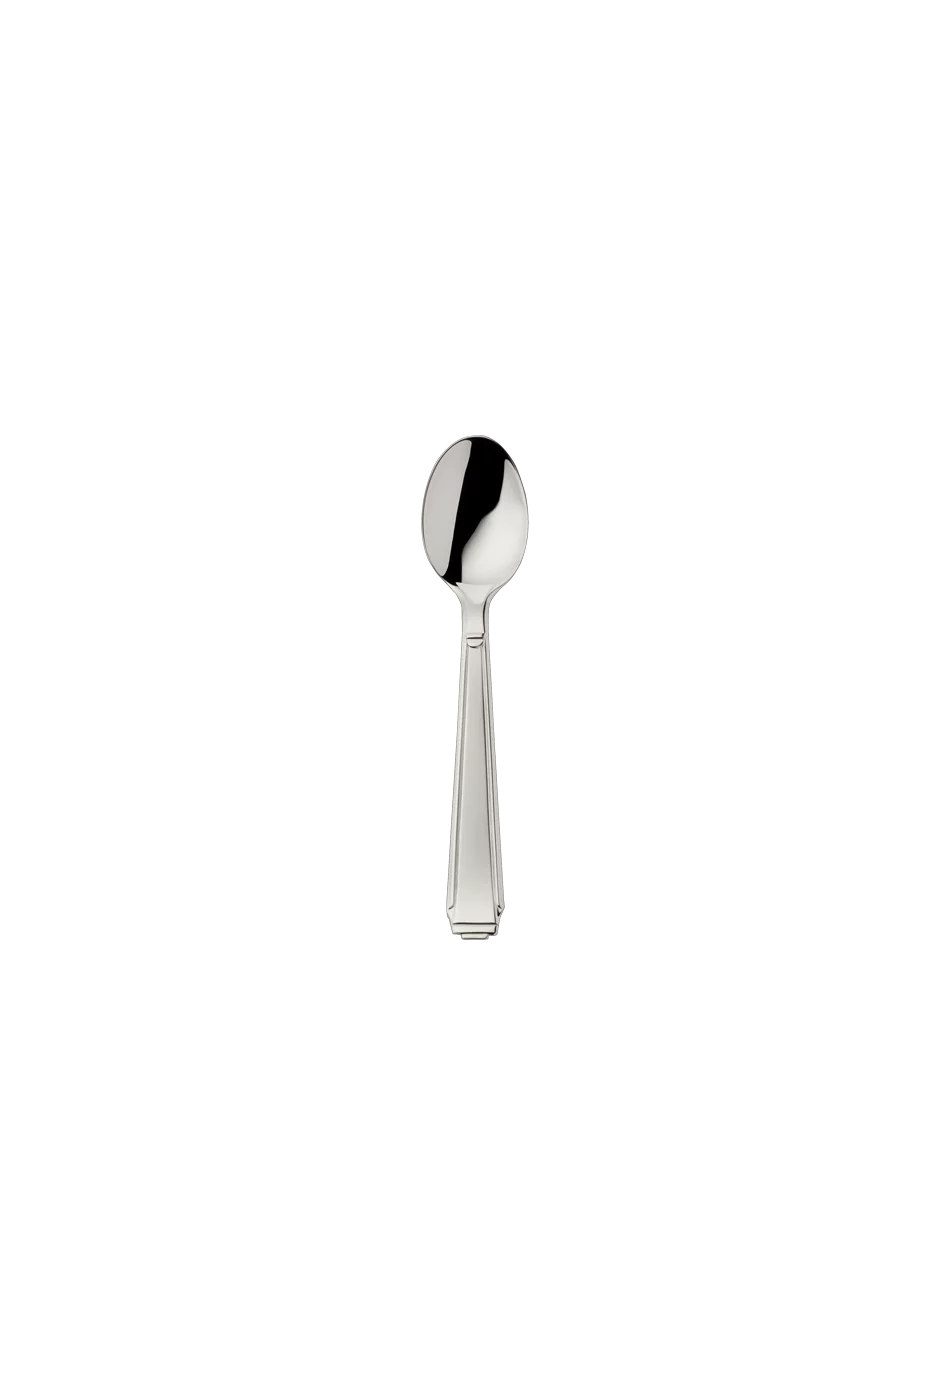 Art Deco Mocha Spoon 10,5 Cm (150g massive silverplated)